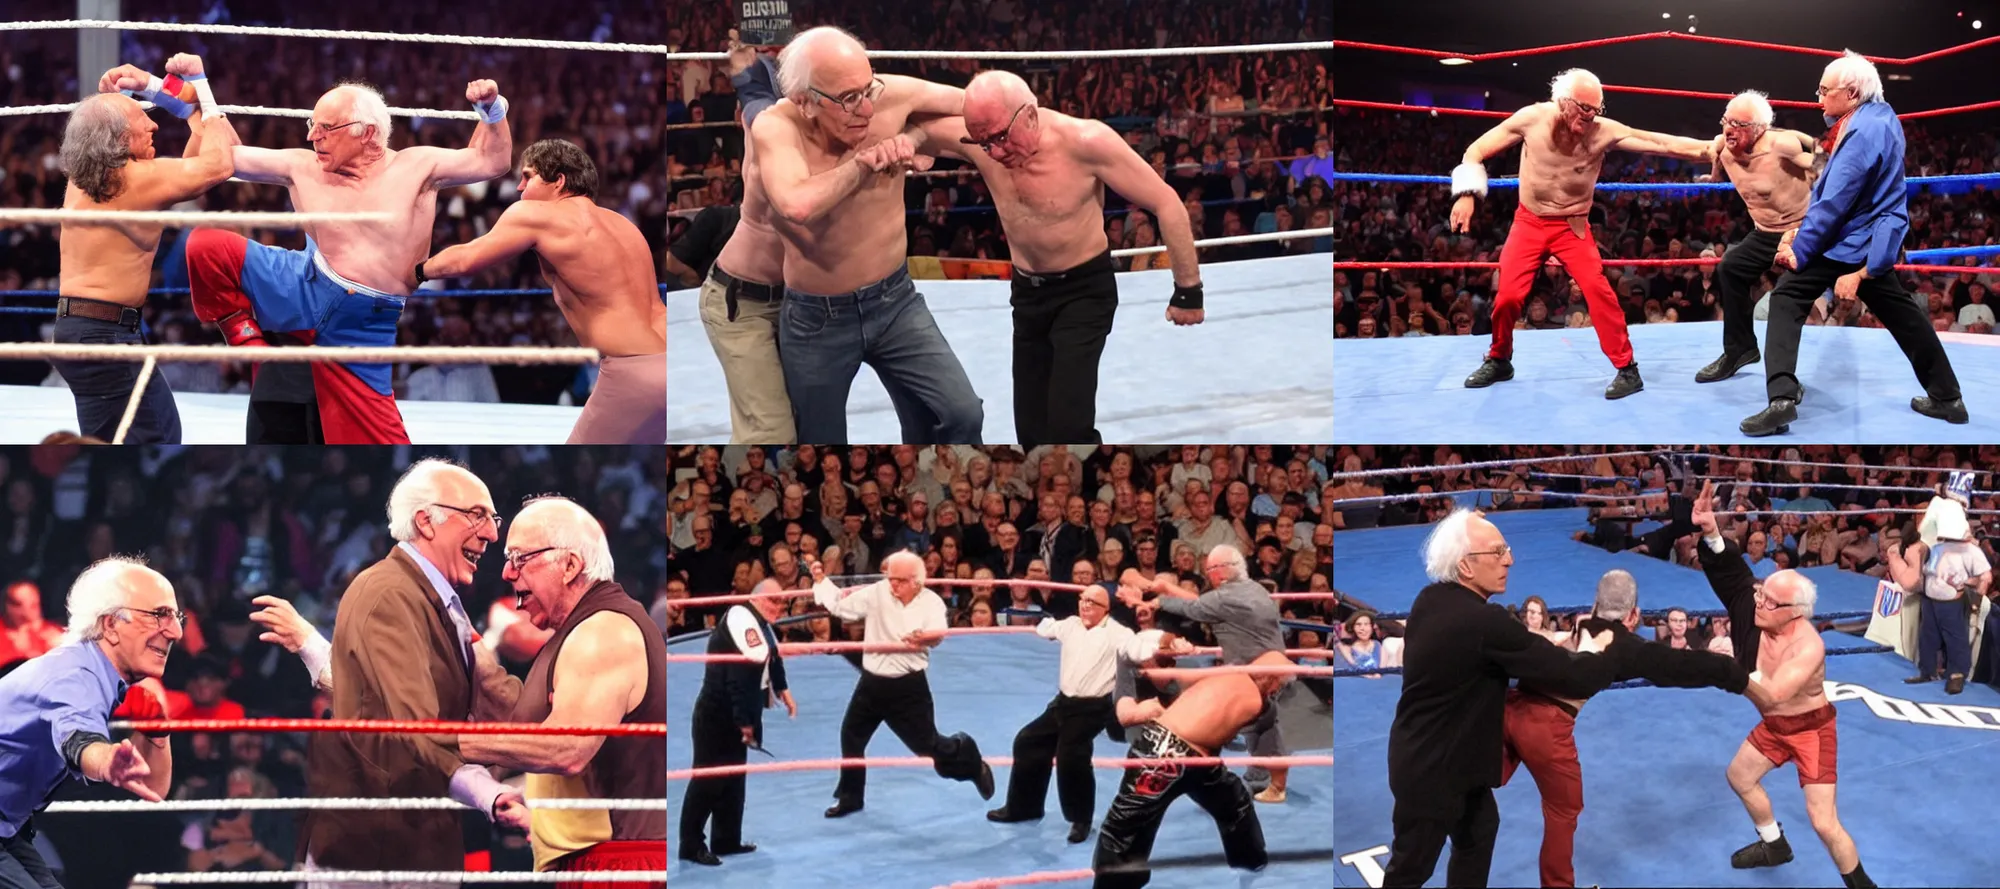 Prompt: Larry David fighting Bernie Sanders in the WWE wrestling ring